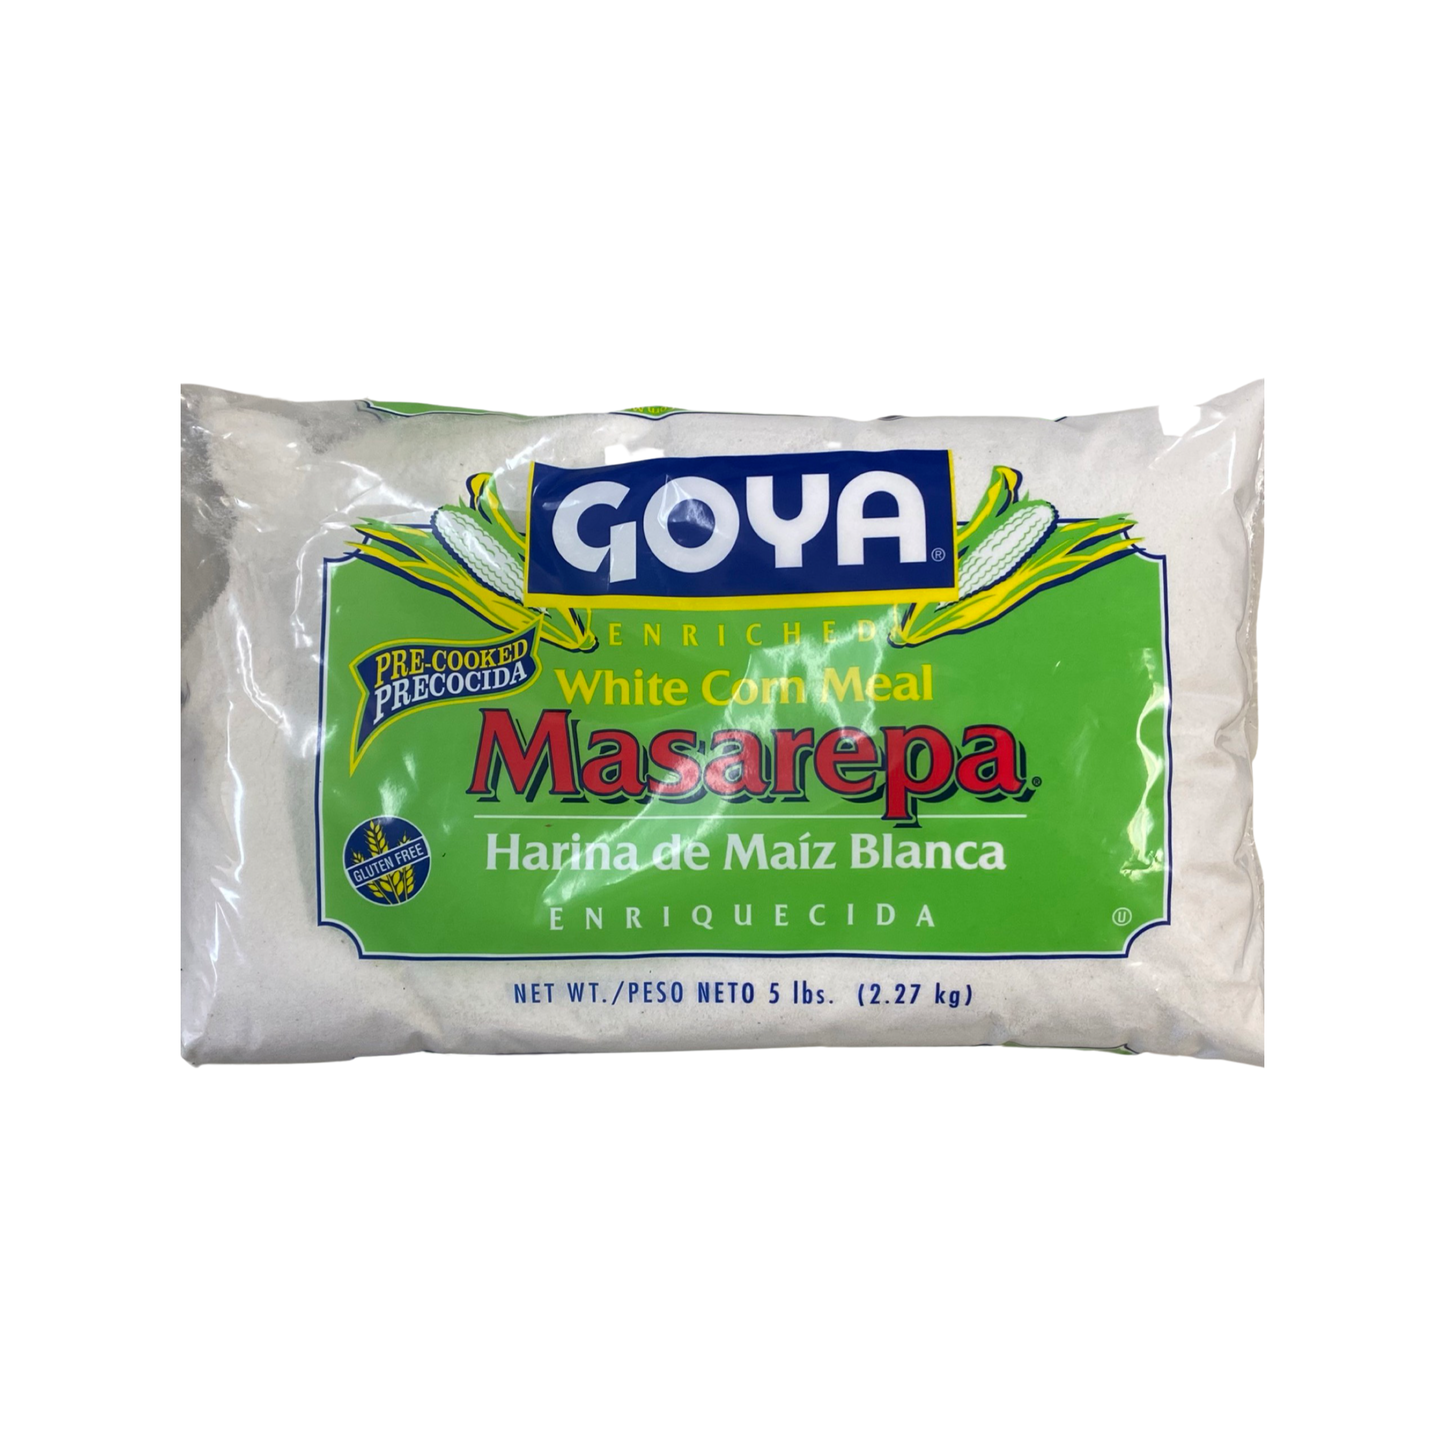 Goya Maspera White-corn Meal Precooked - 80 OZ ($1.70 / Pound)